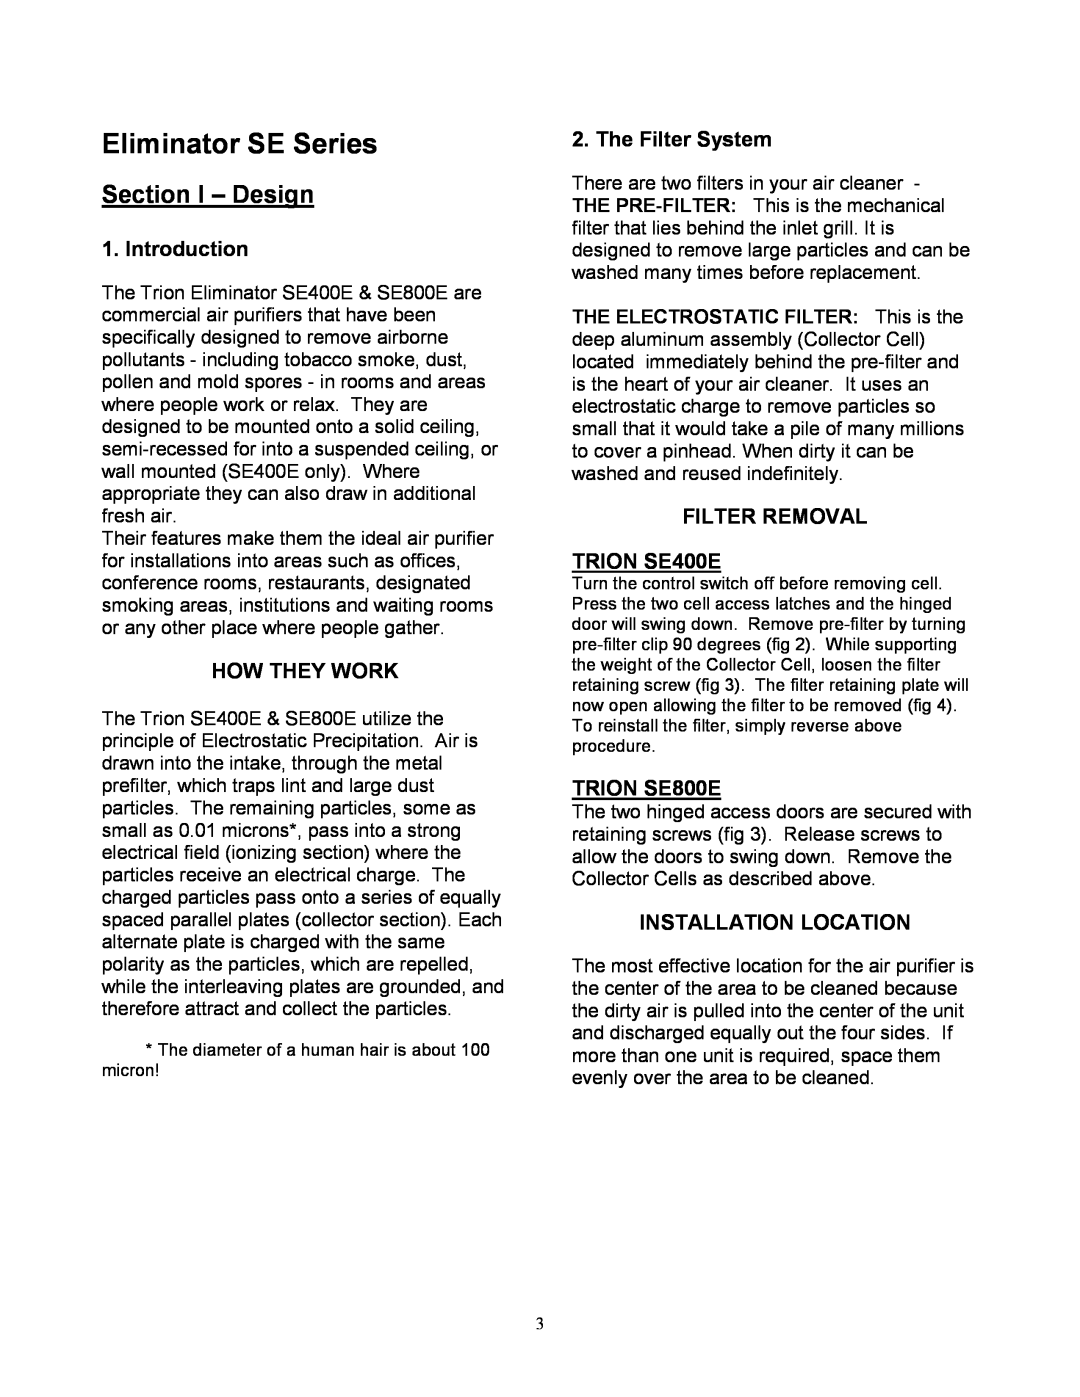 Trion SE400E manual Eliminator SE Series, Section I - Design, Introduction, How They Work, The Filter System, TRION SE800E 